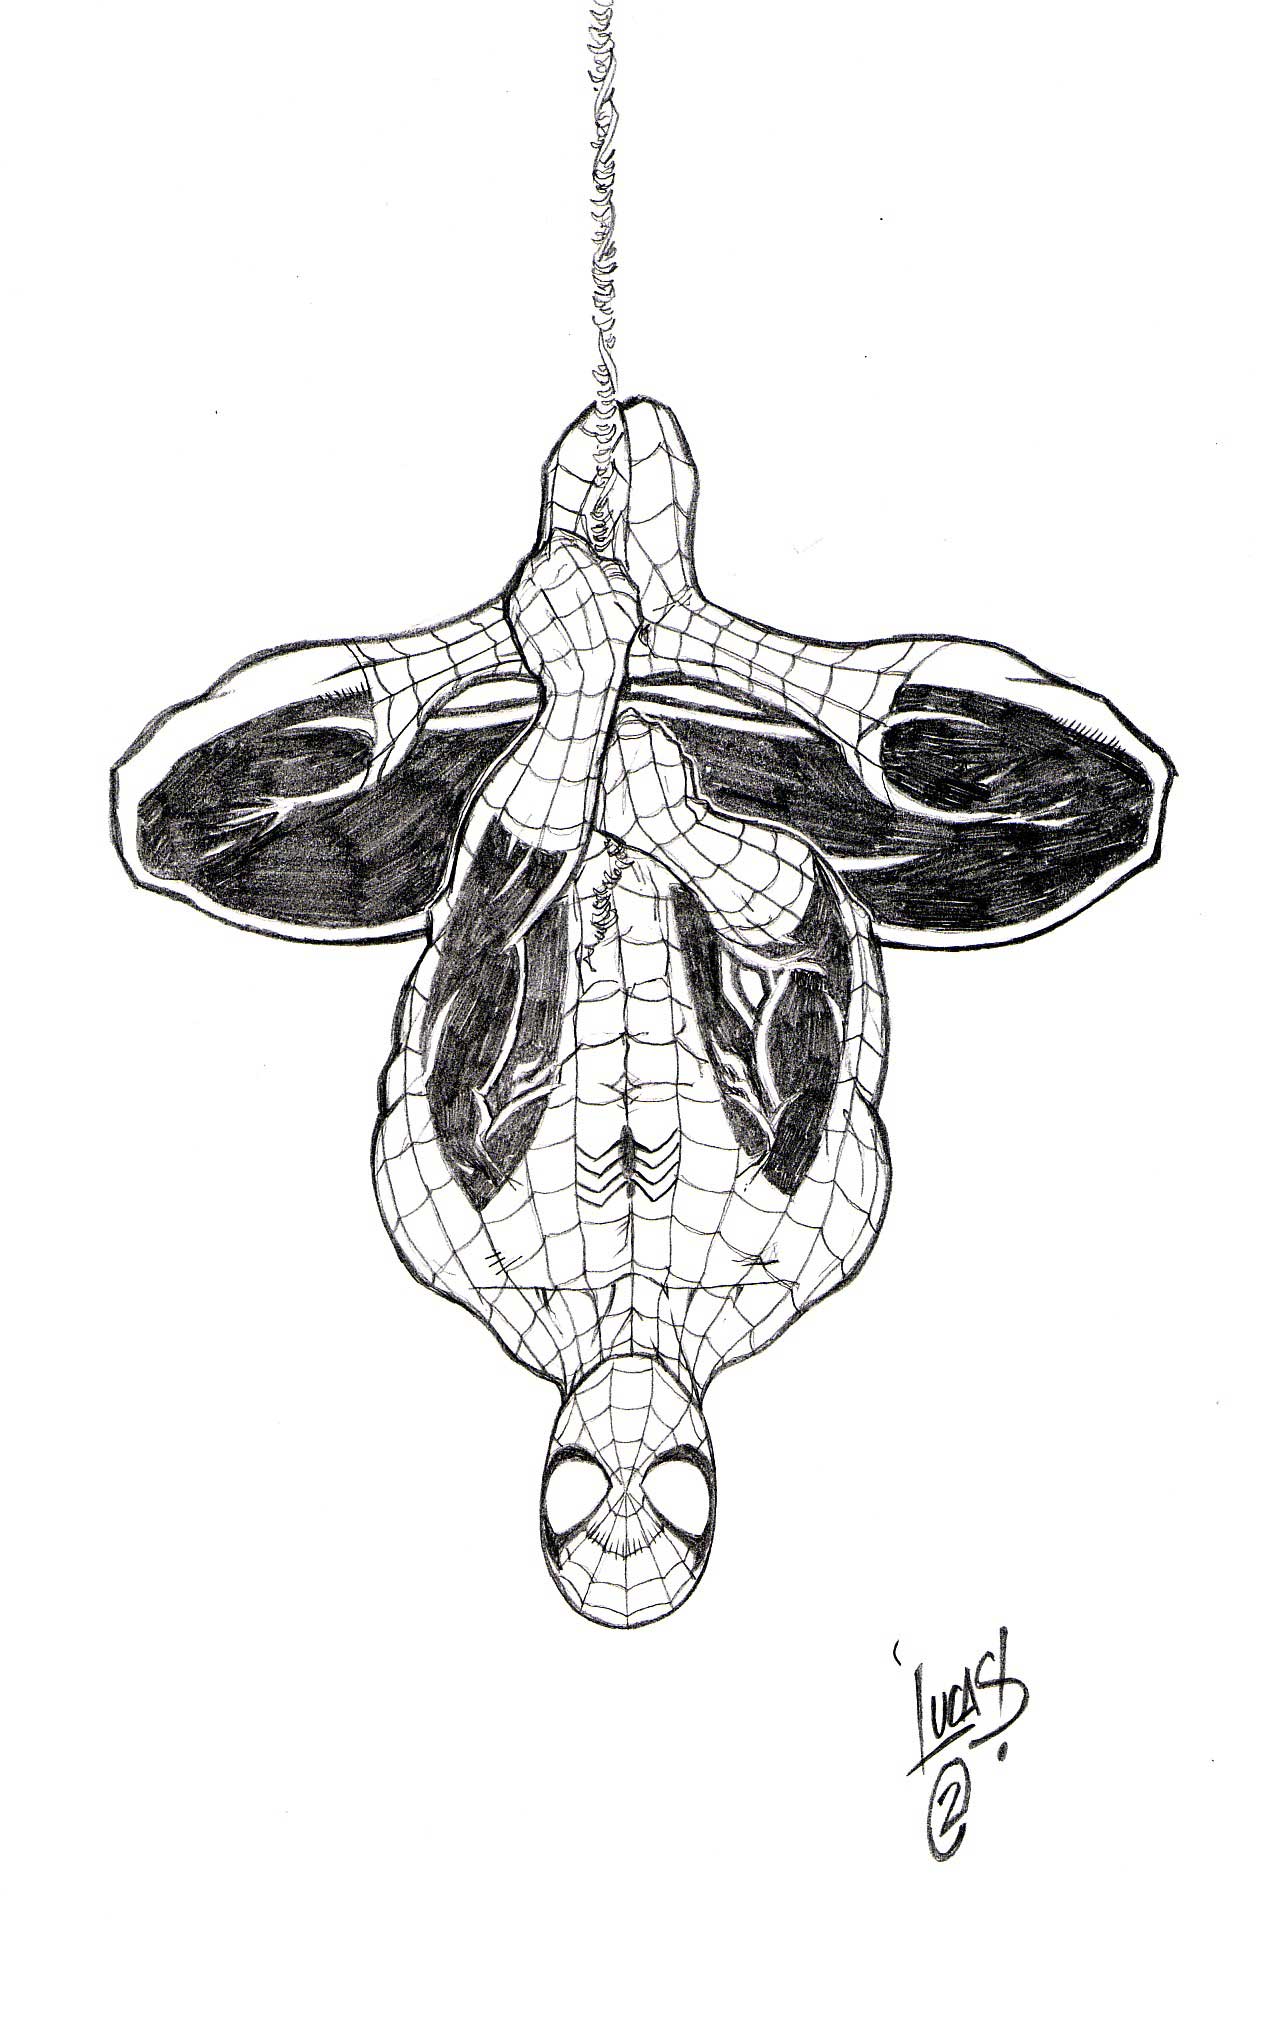 1261x2037 spiderman cartoon drawing upside down - Spiderman Hanging Ups...